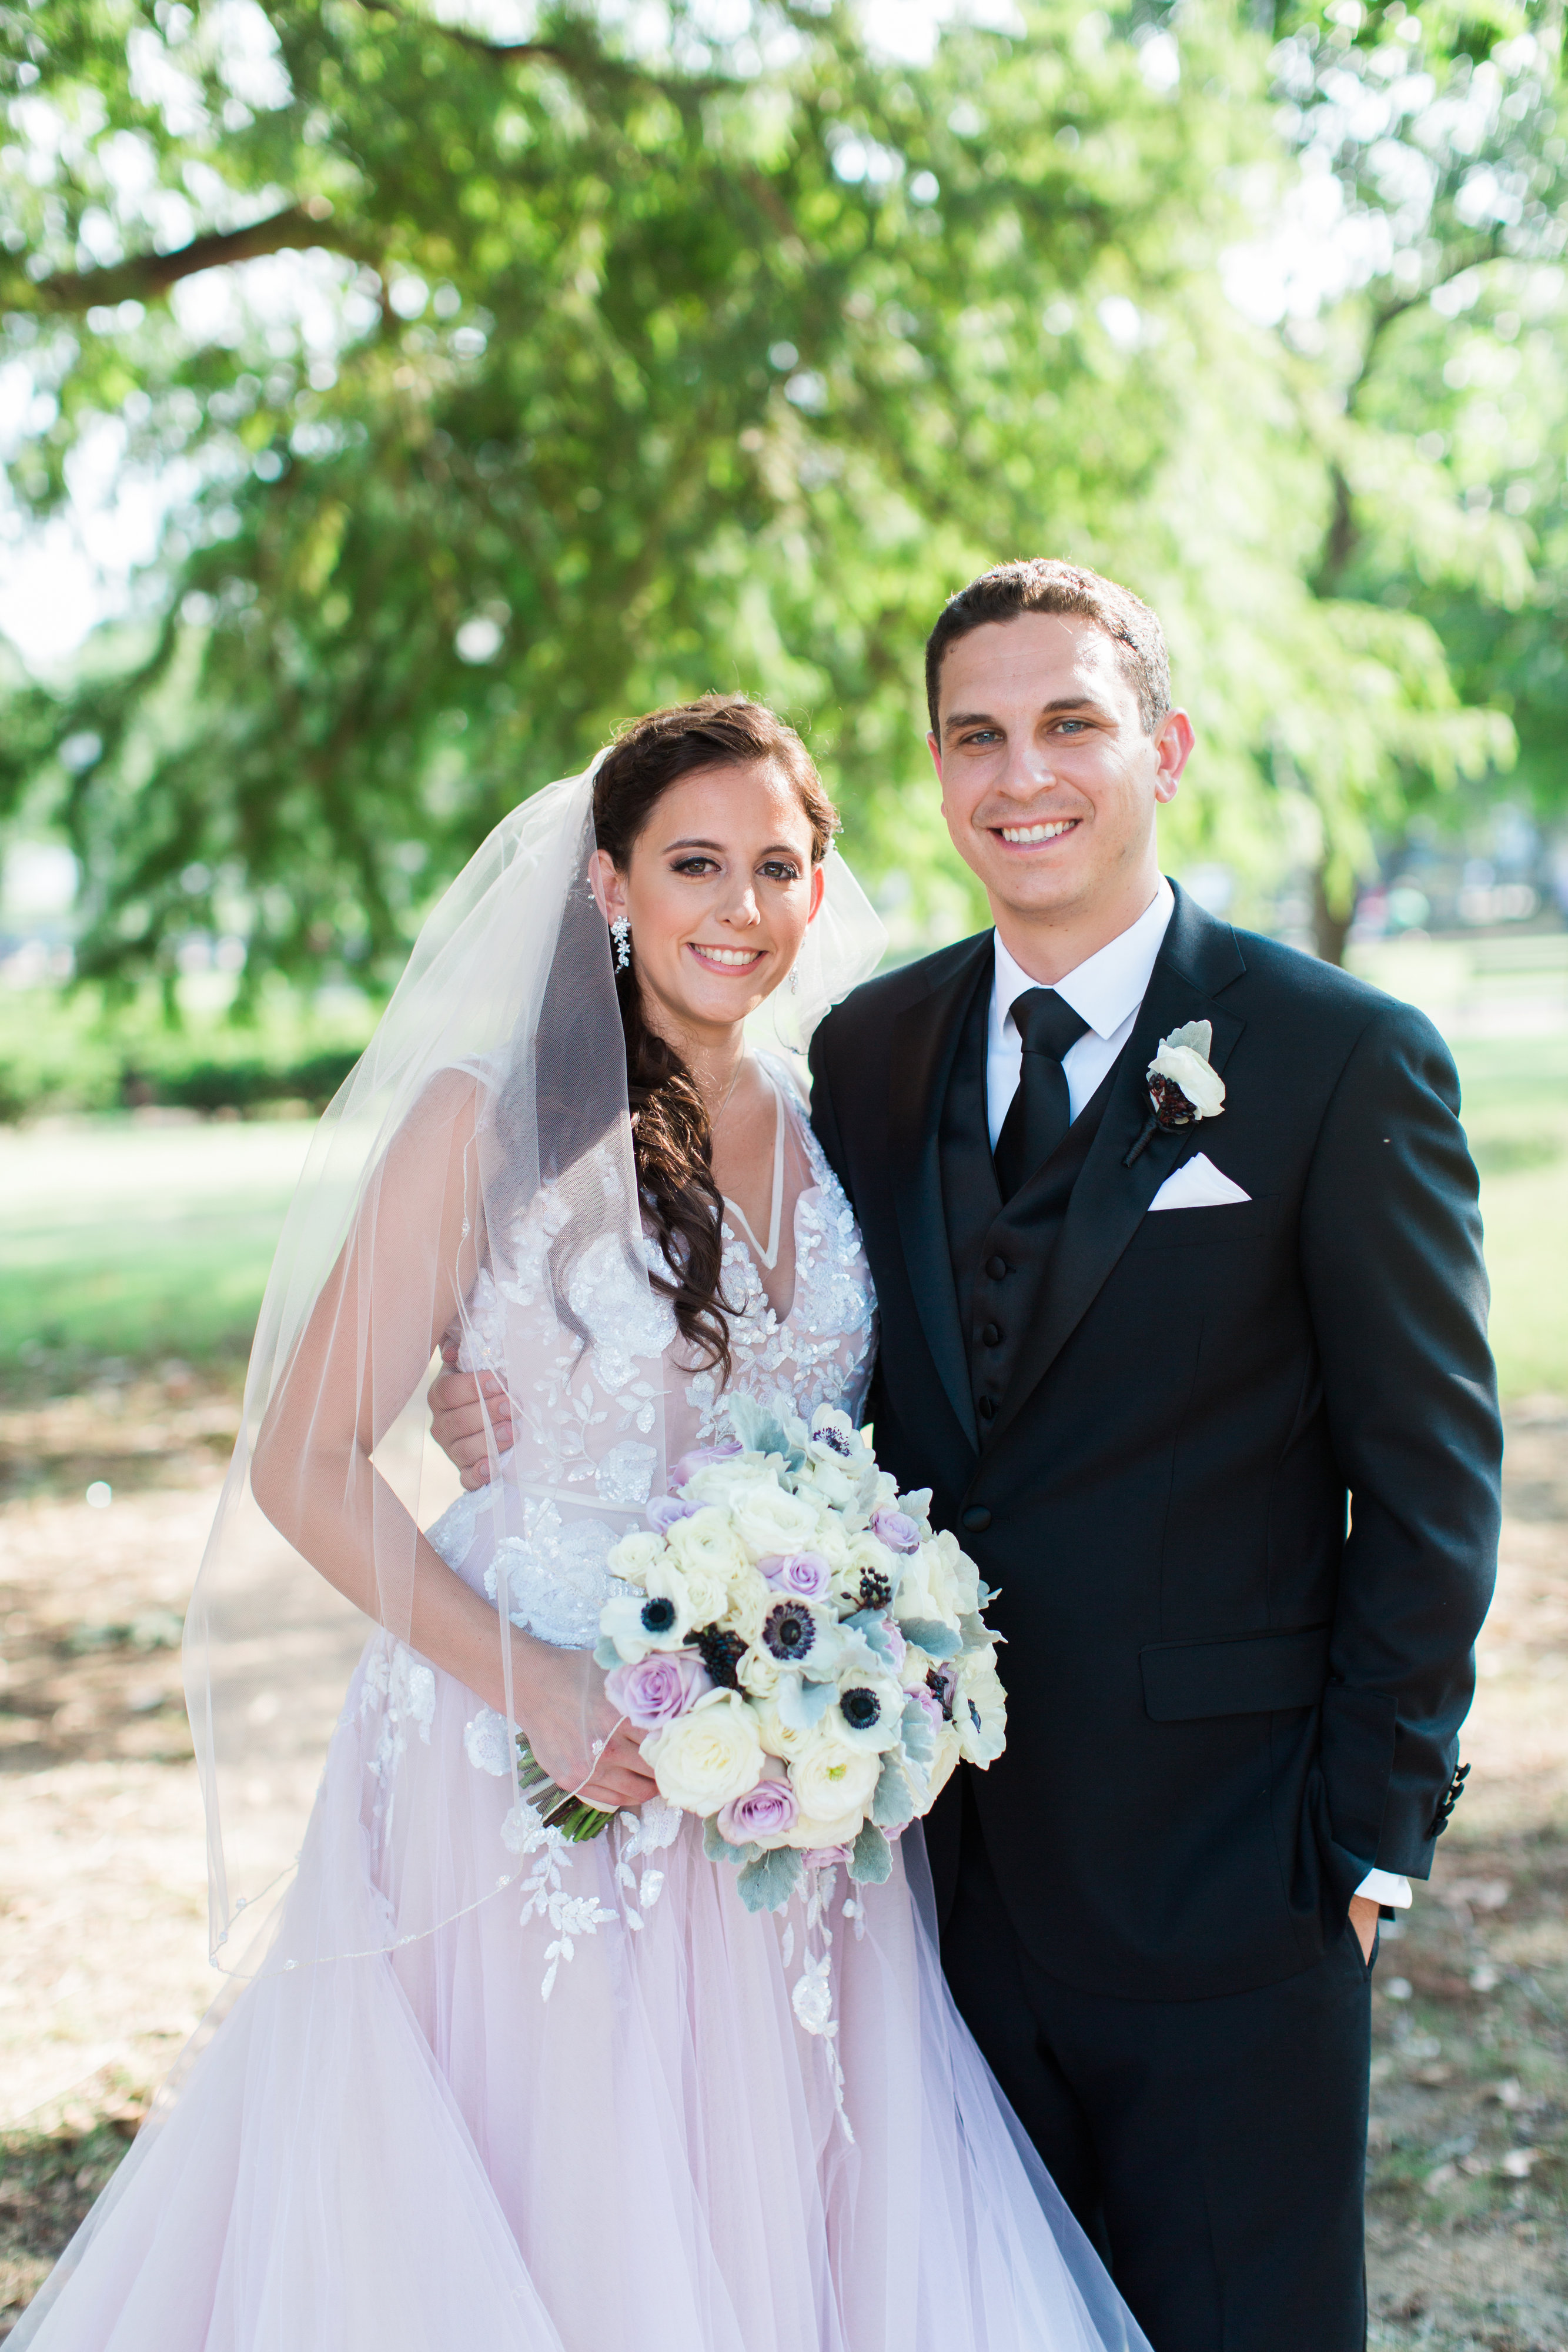 St. Regis Washington Wedding, Event Planning by Bright Occasions, Sarah Bradshaw Photography